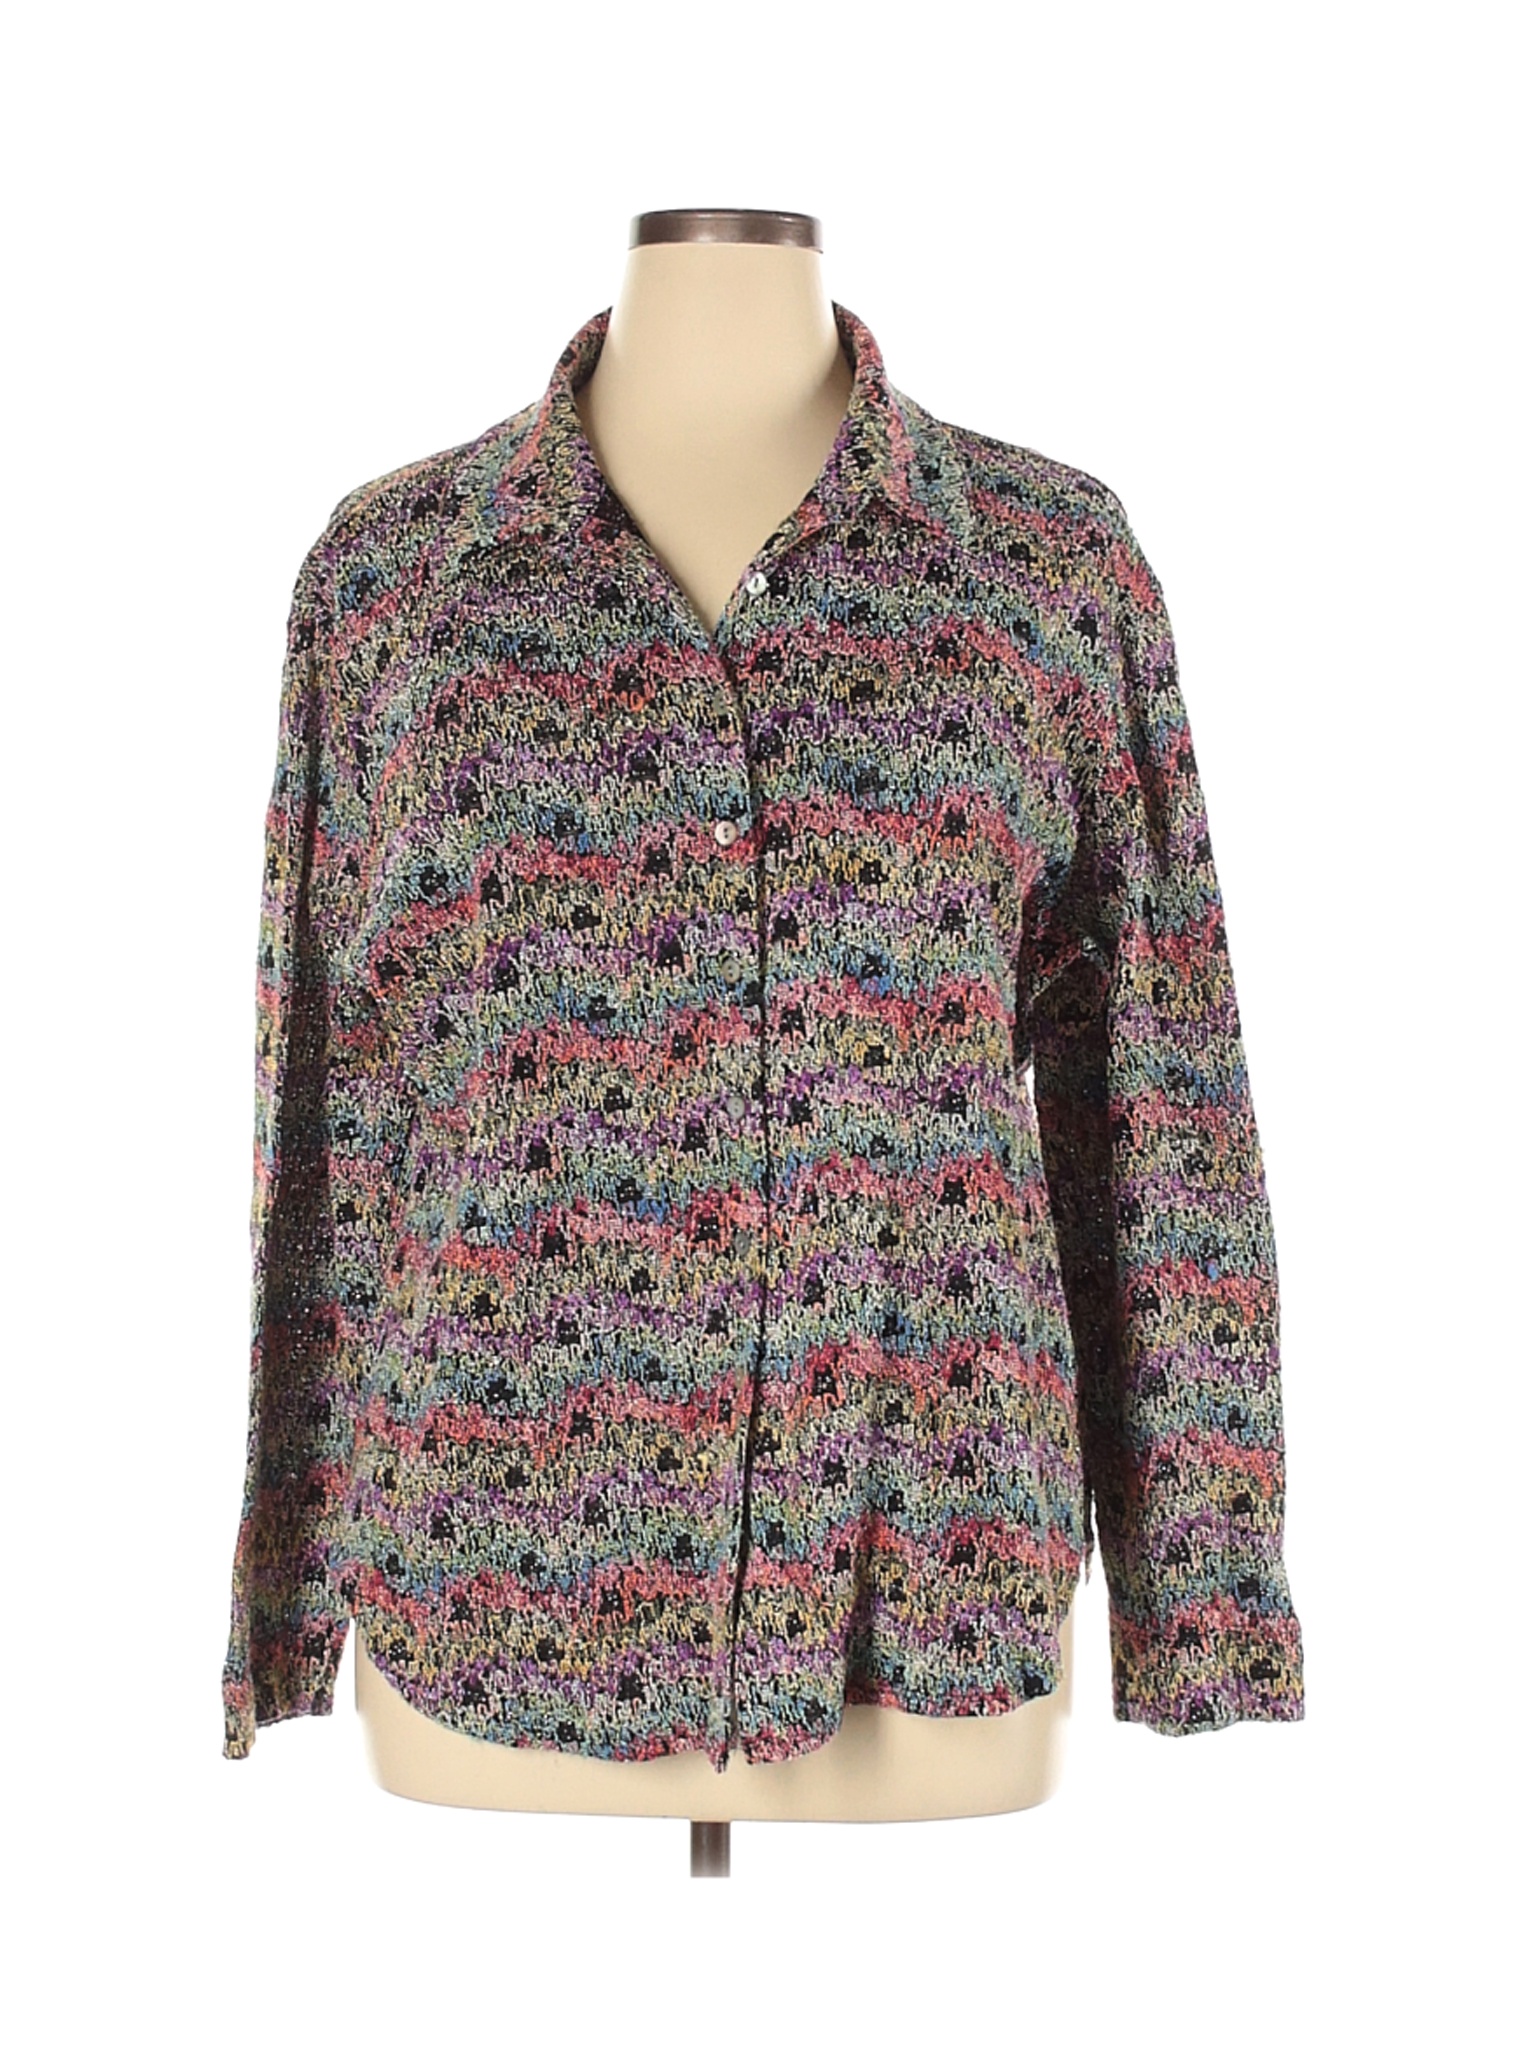 Chico's Design Women Purple Long Sleeve Top XL | eBay